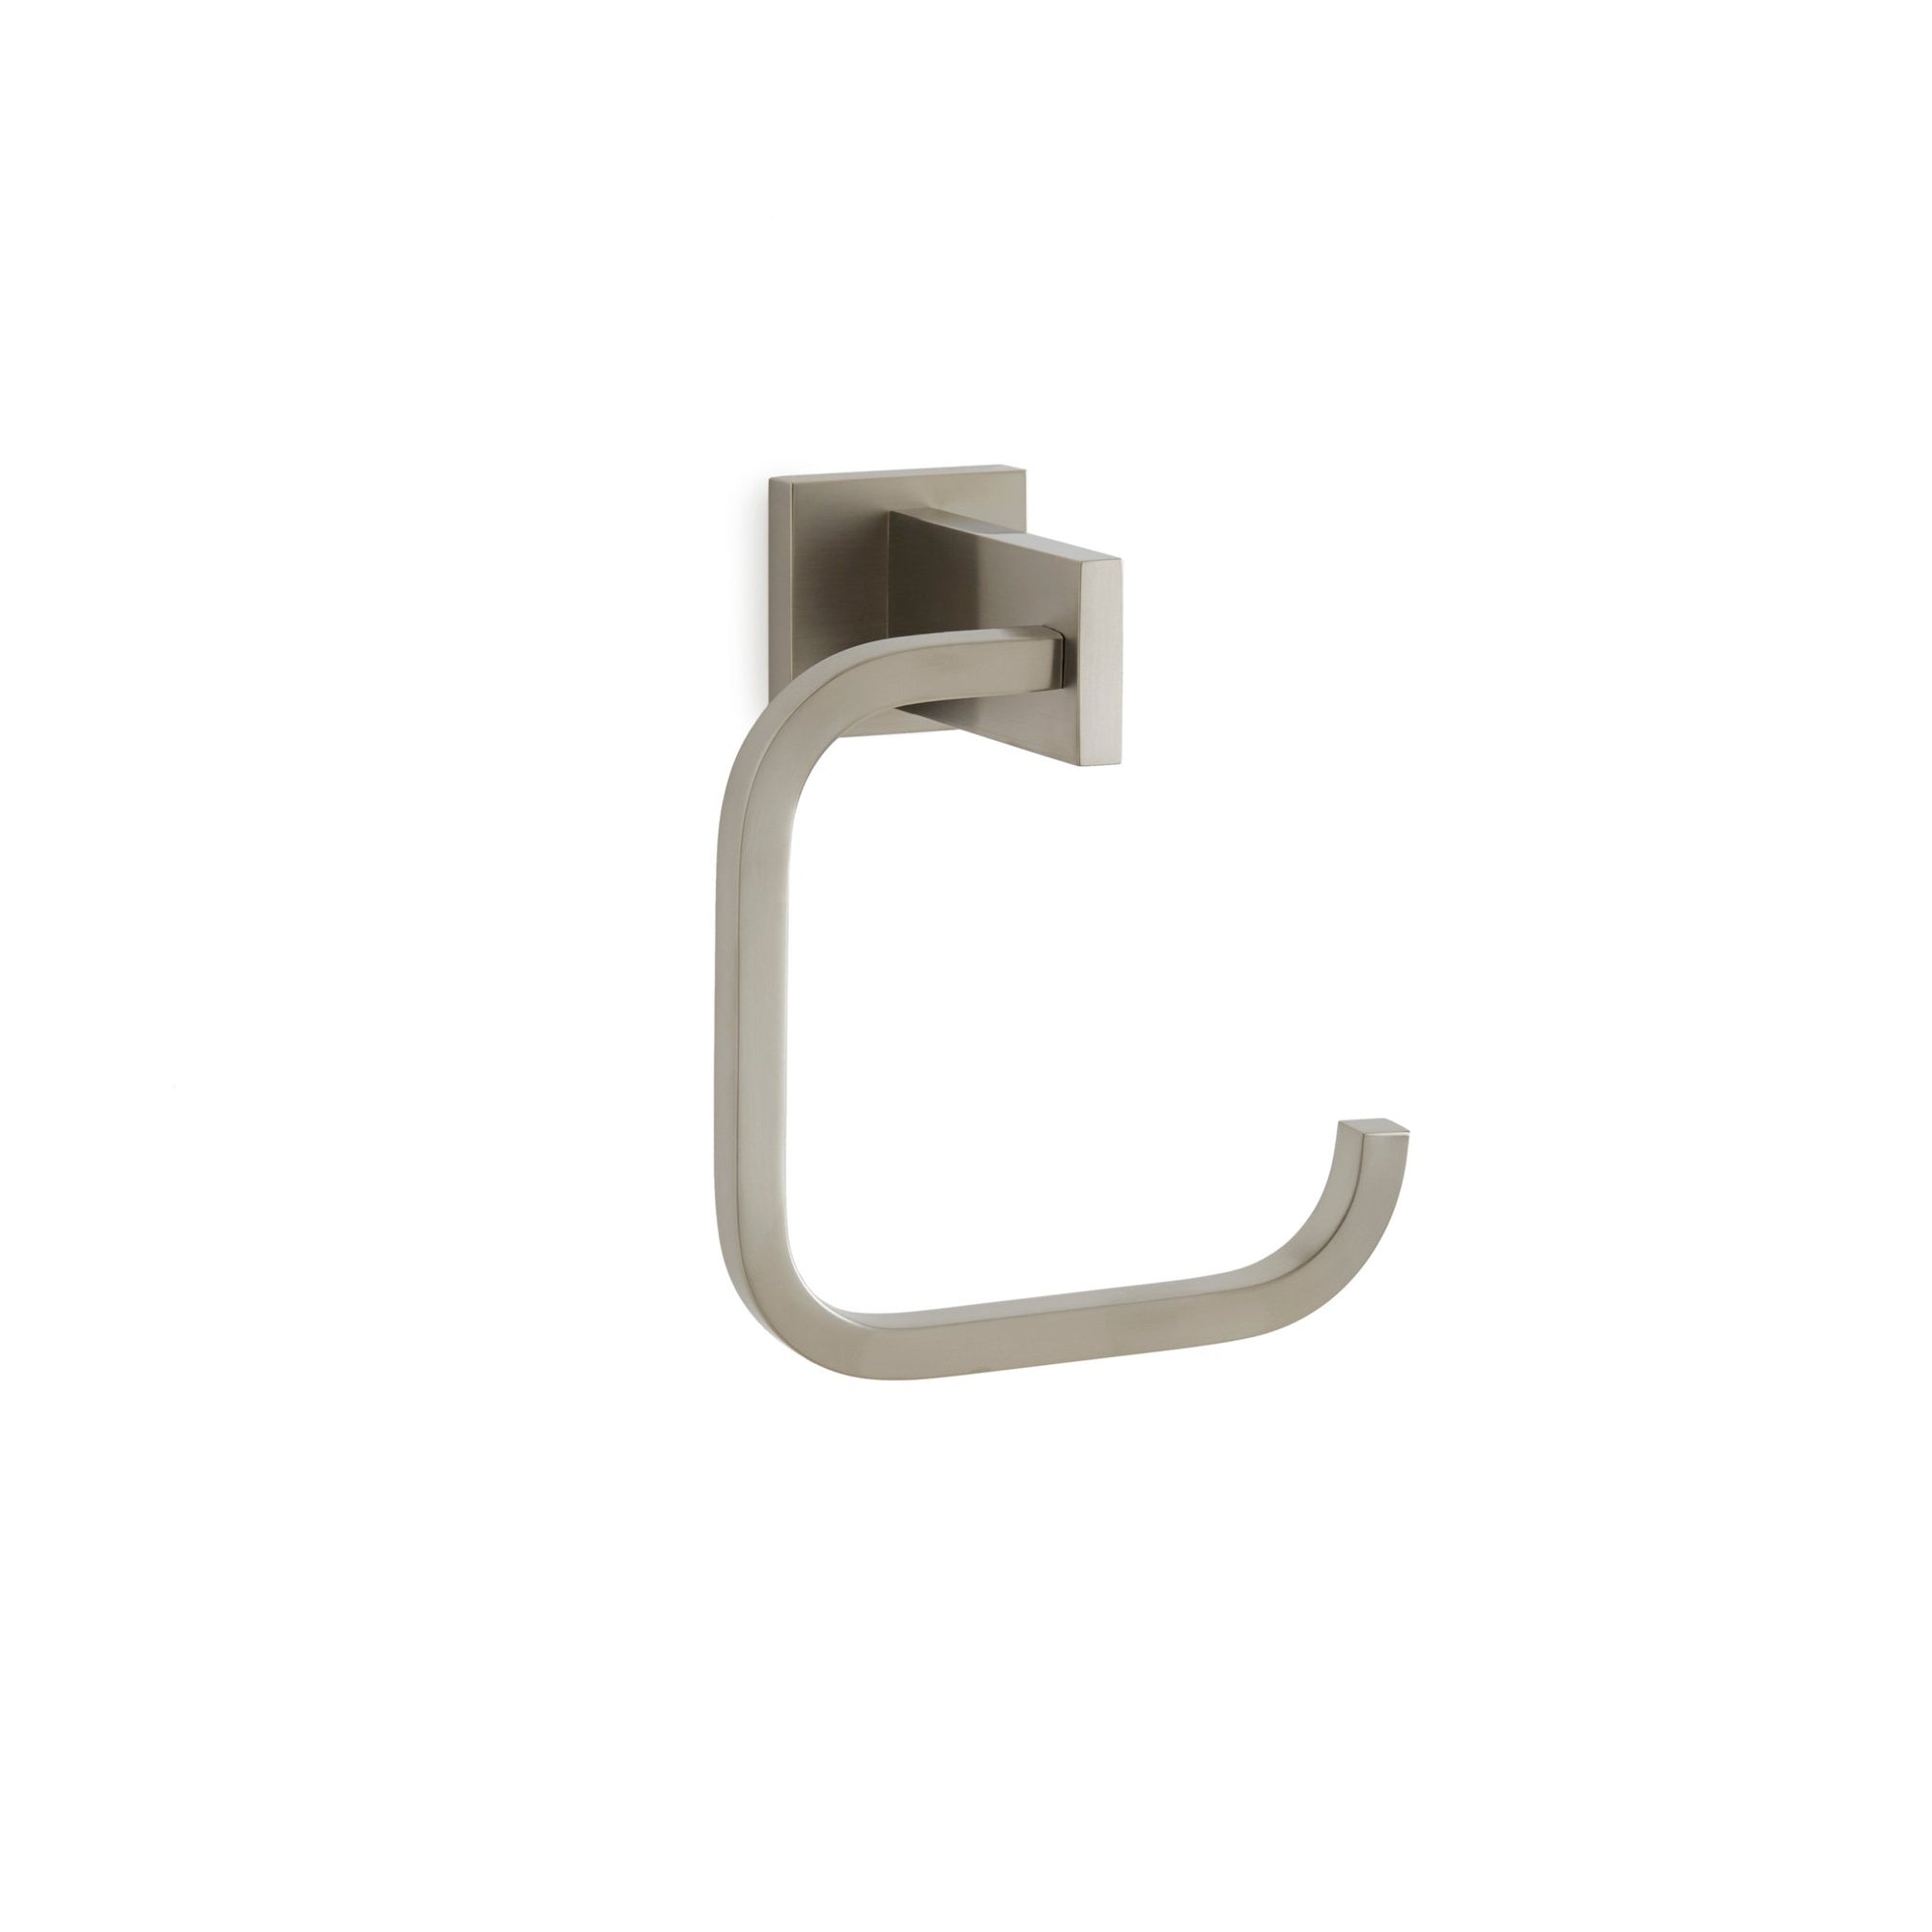 101TR-BN Sherle Wagner International Modern Towel Ring in Brushed Nickel metal finish